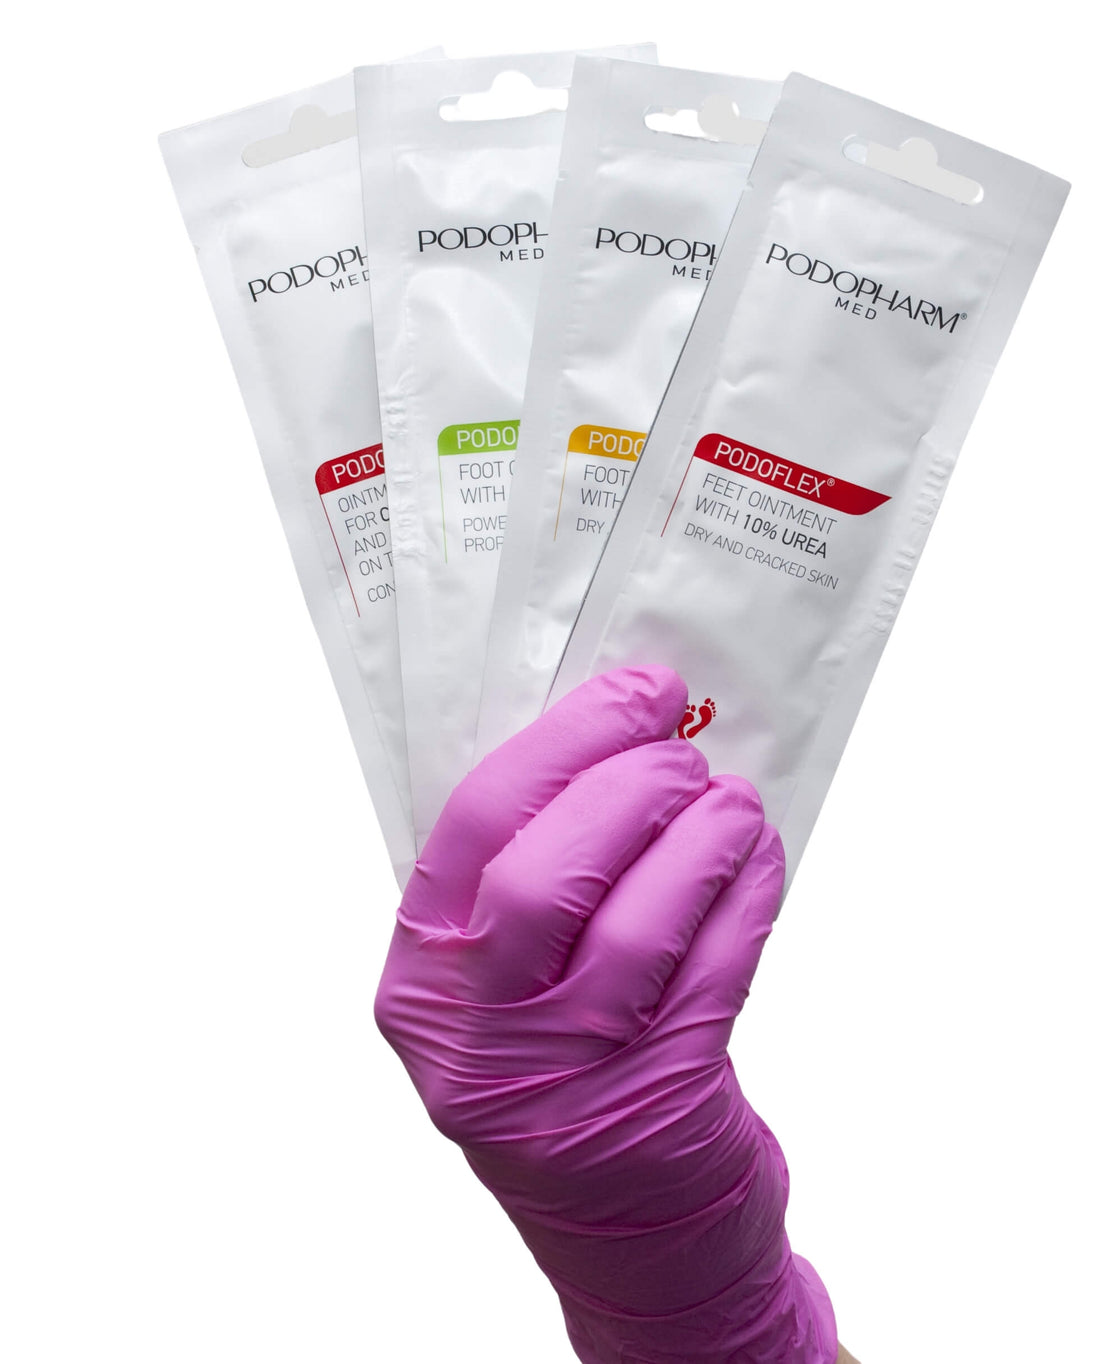 Podopharm Med Podoflex Foot Cream With Lipids Dry And Normal Skin 10ml Podopharm